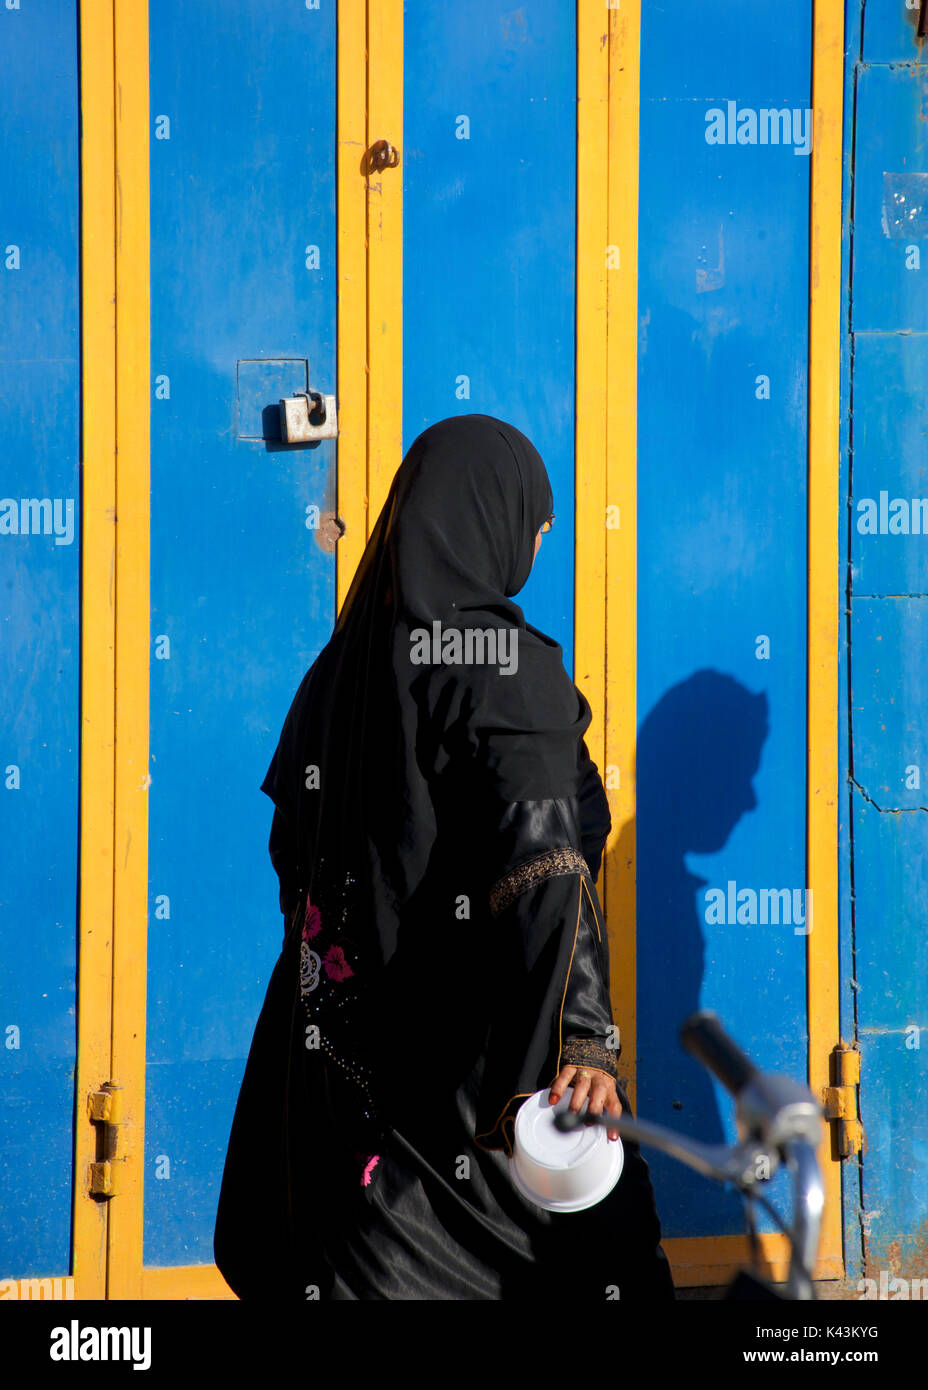 Iranian woman in chador and accompanying shadow (of a man), Shiraz Stock Photo